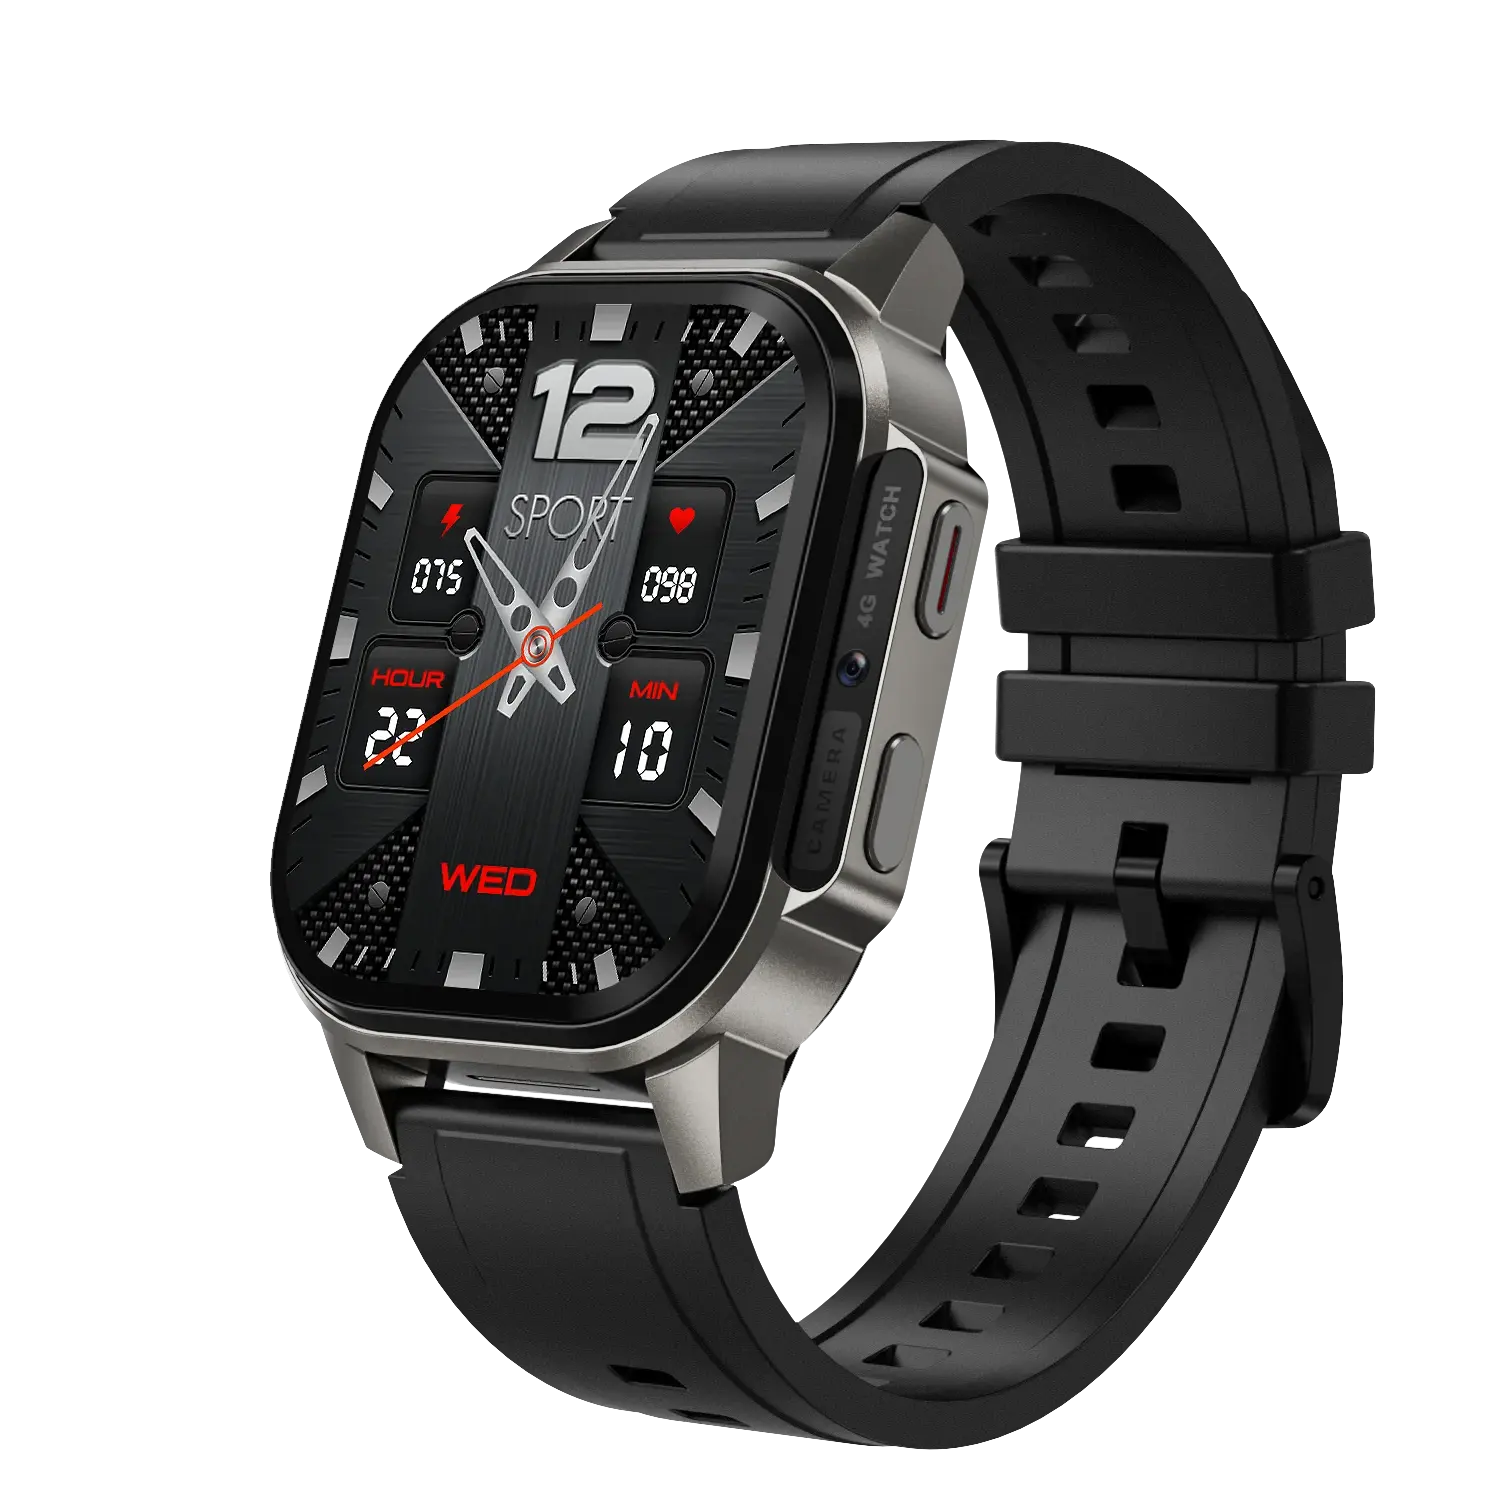 4G 2.13 pollici Amoled 1000Mah batteria Smart Watch telefono Android Sim card supporto Sdk GPS Video chiamata fitness tracker App store